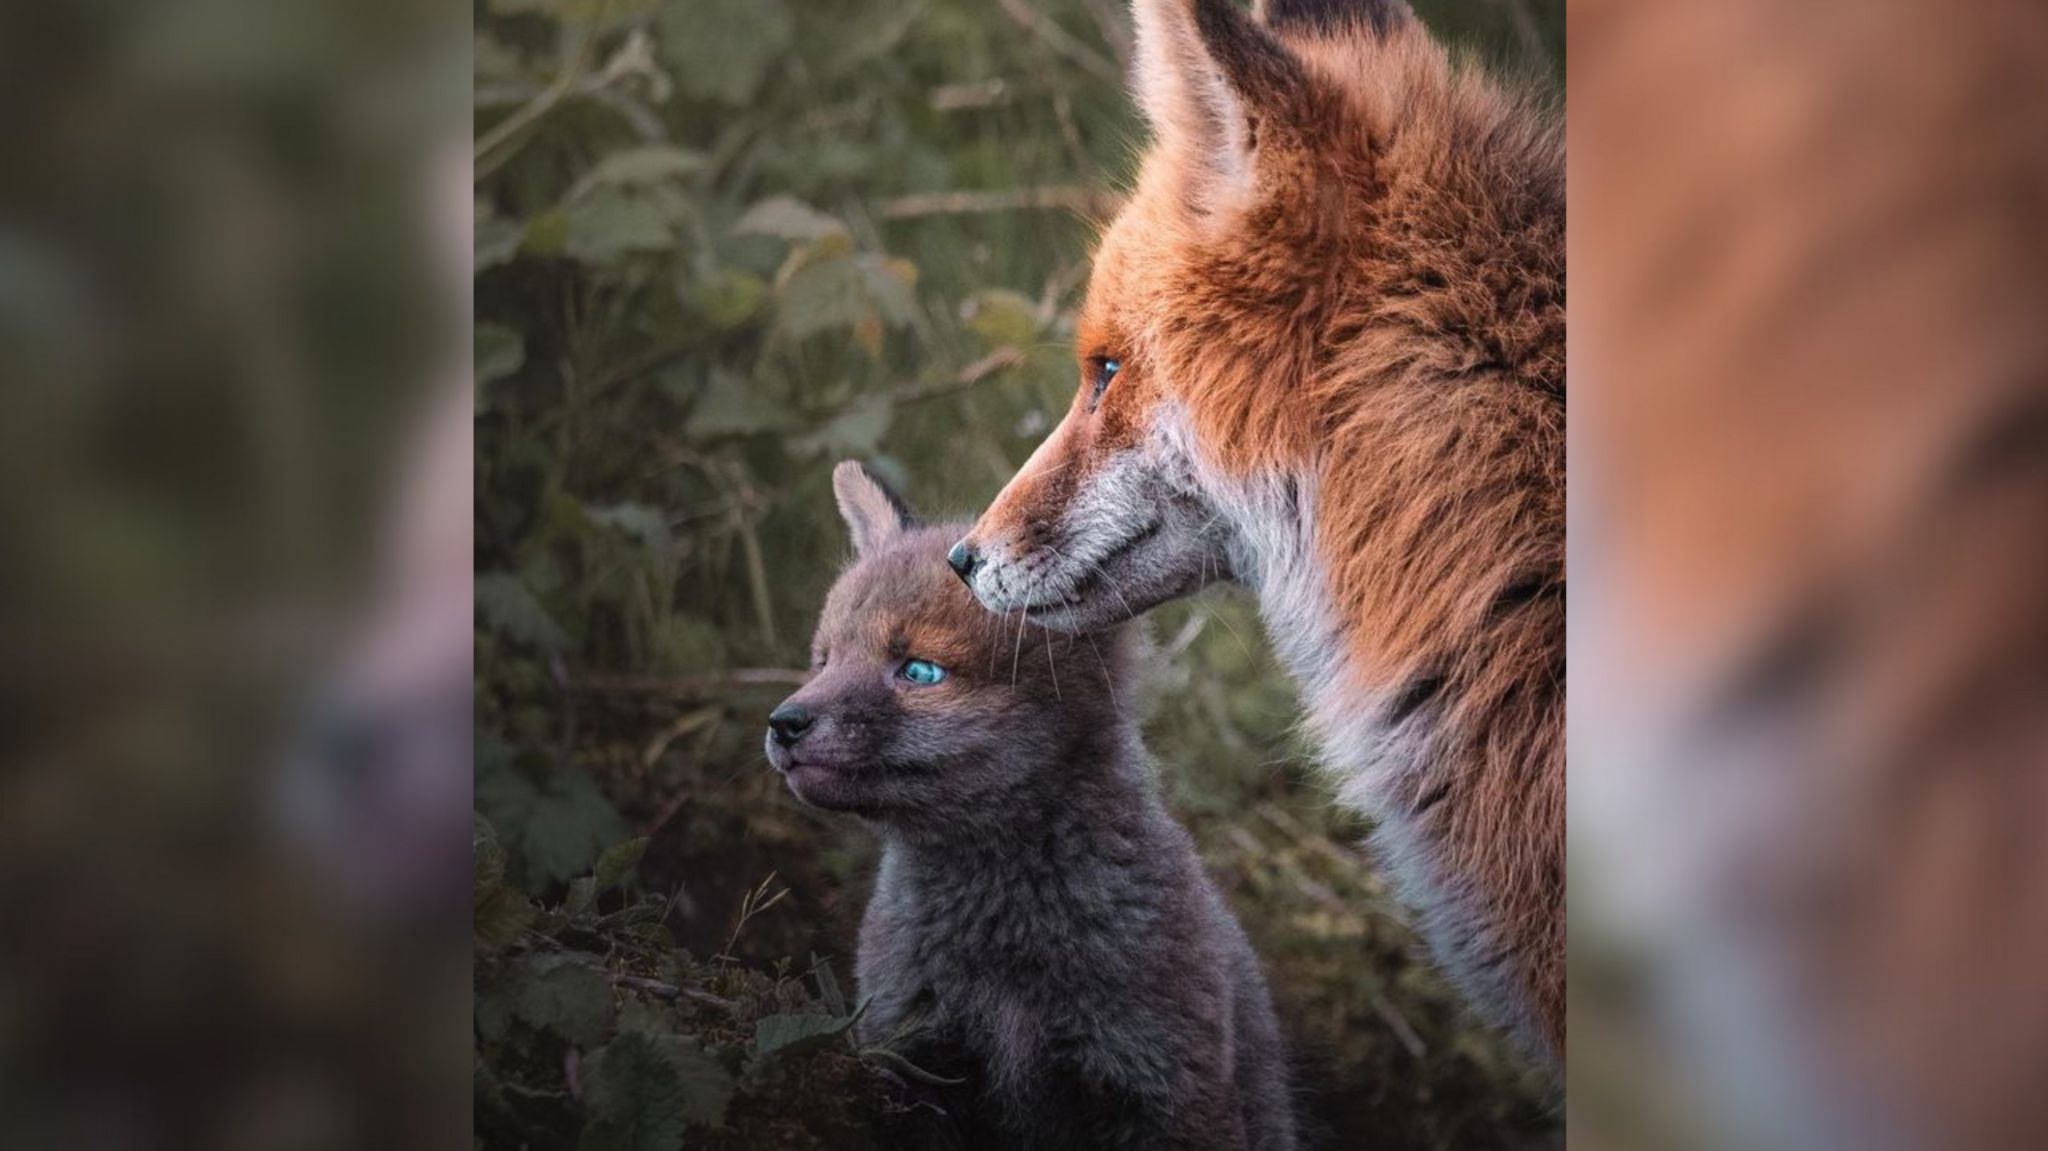 A fox cub with striking blue eyes sitting next to its mum